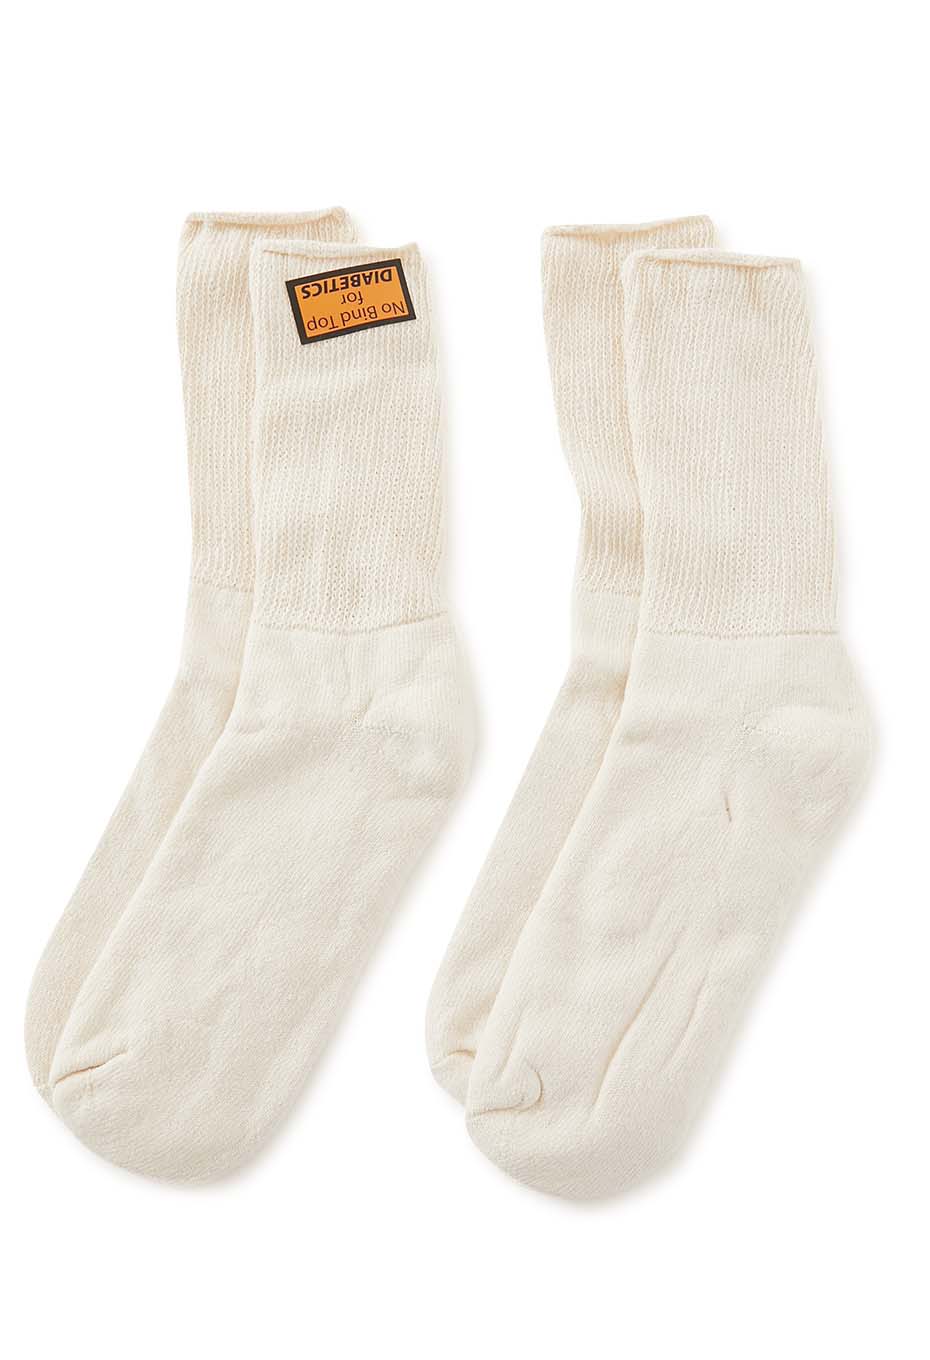 RAILROAD SOCK Men's Diabetic Socks